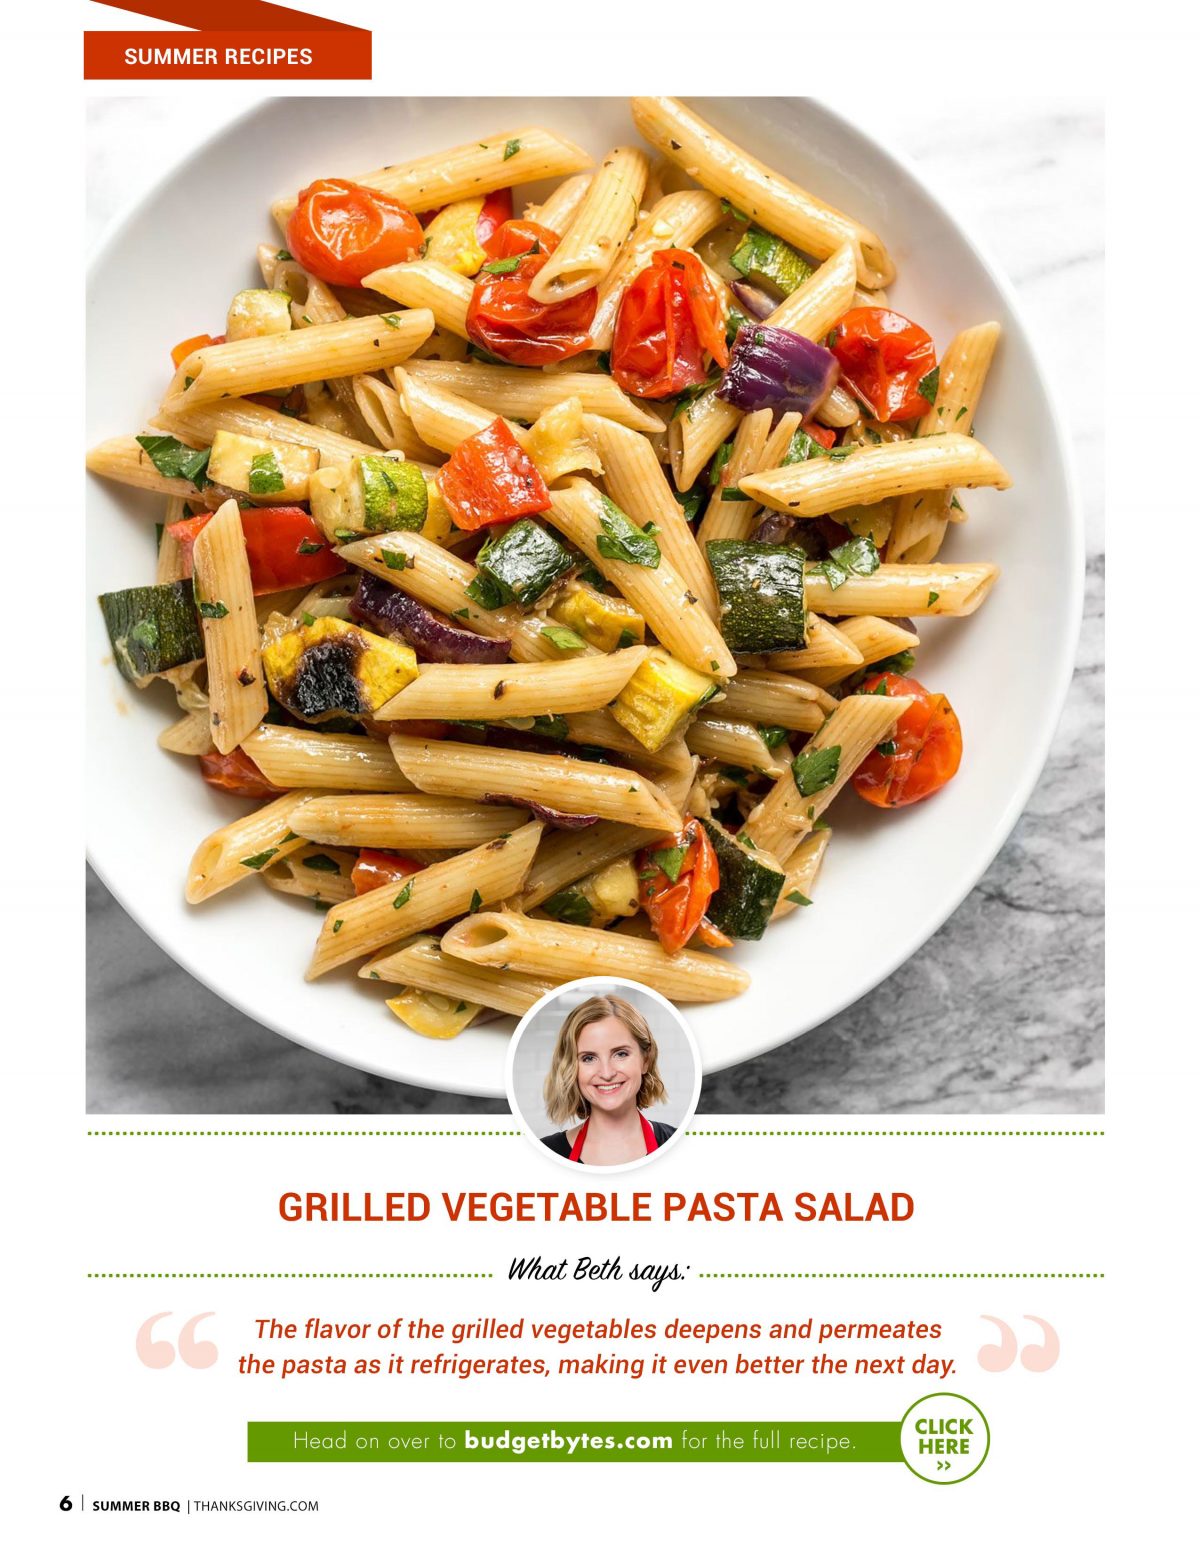 Grilled vegetable pasta salad recipe